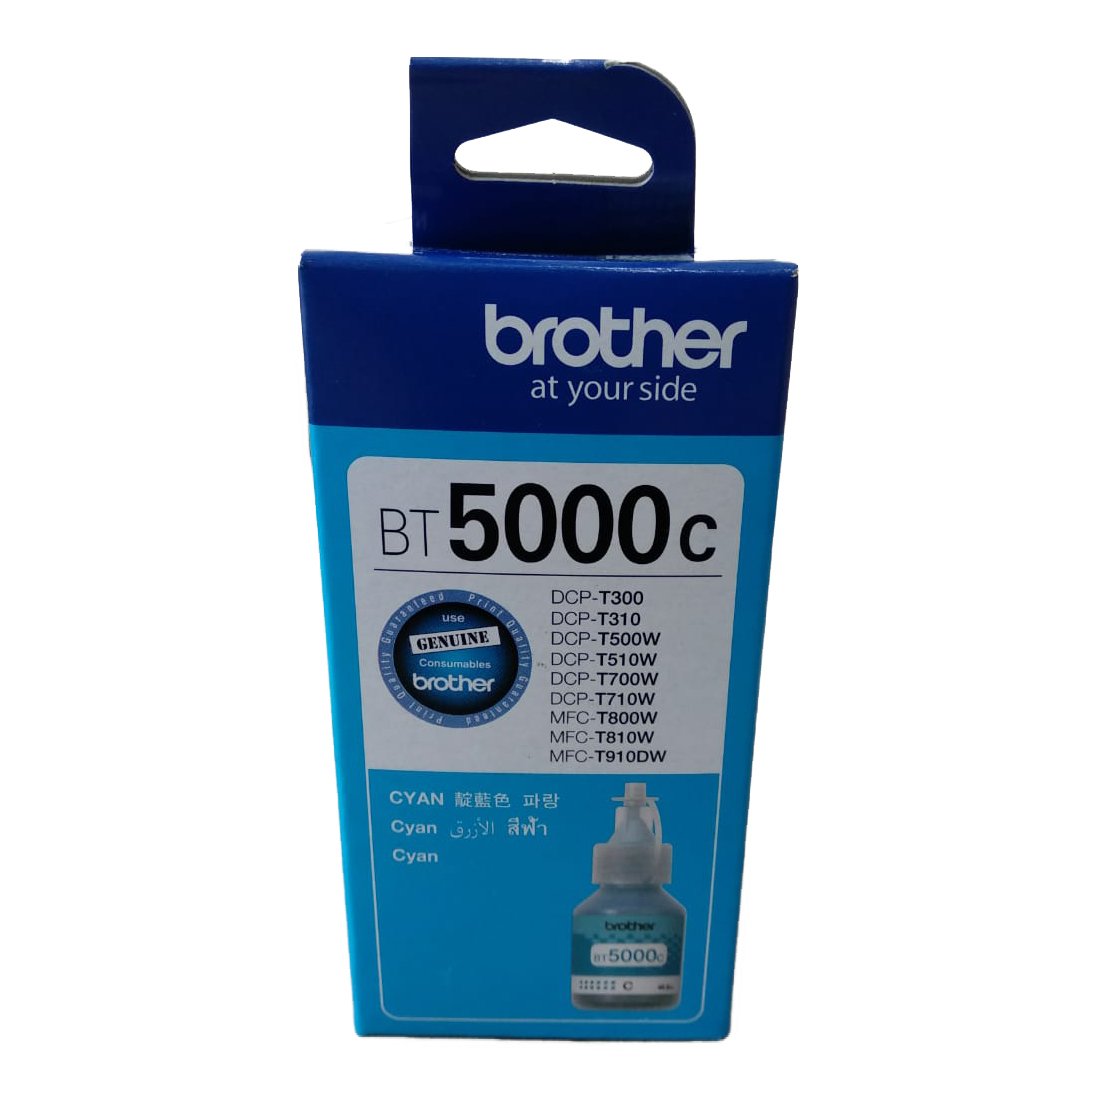 Brother  Ink Bottles for  DCP-T300, T500W, T700W & MFC-T800W Ink Tank Printers